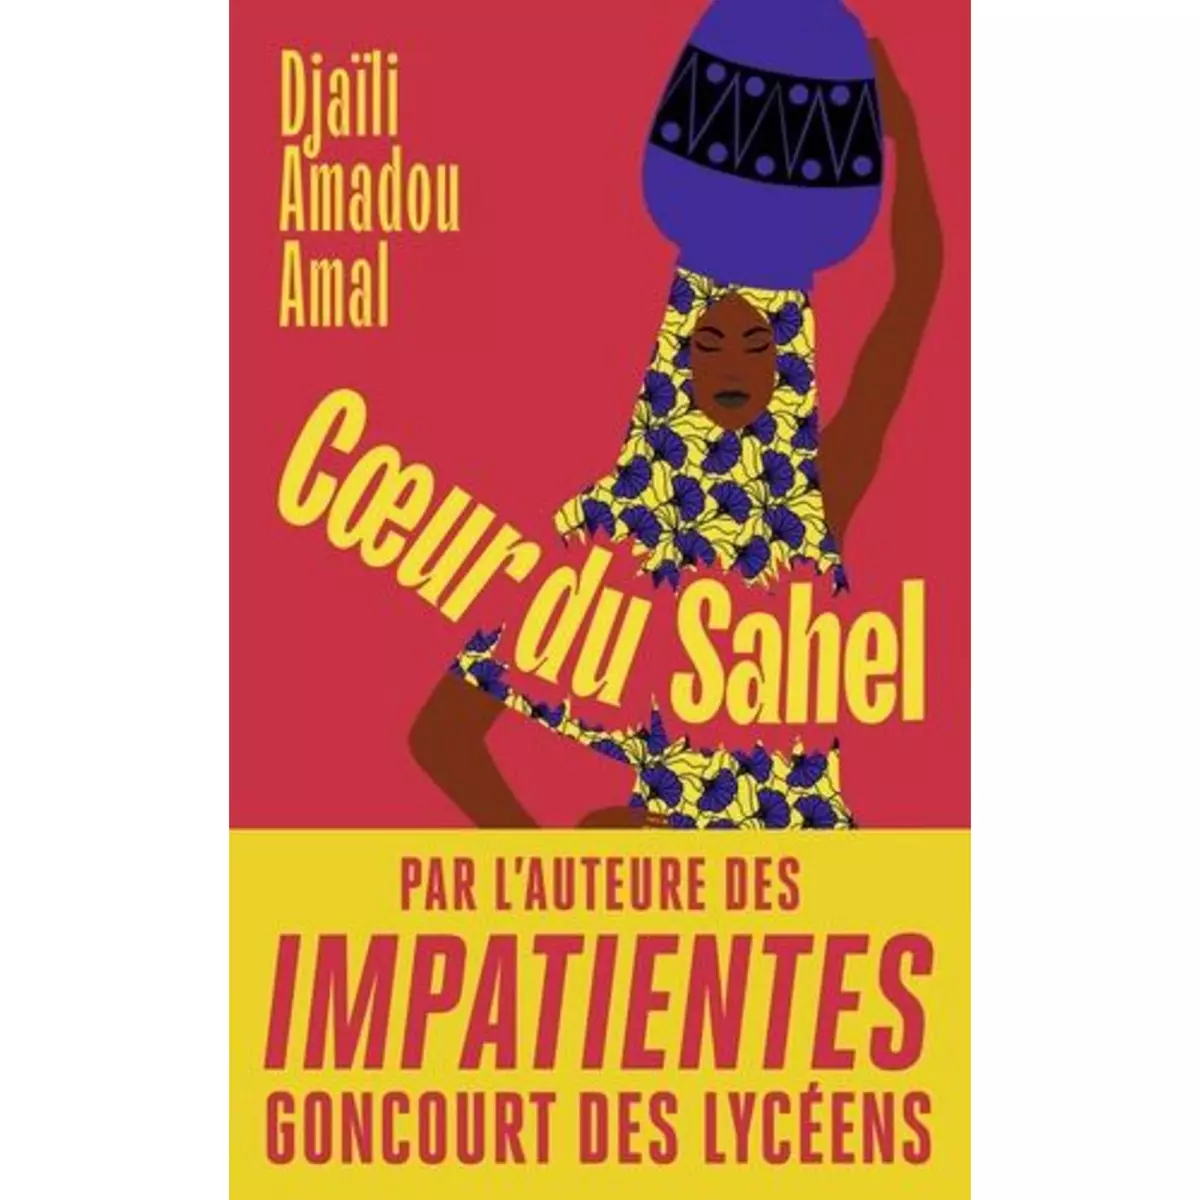  COEUR DU SAHEL, Amadou Amal Djaïli